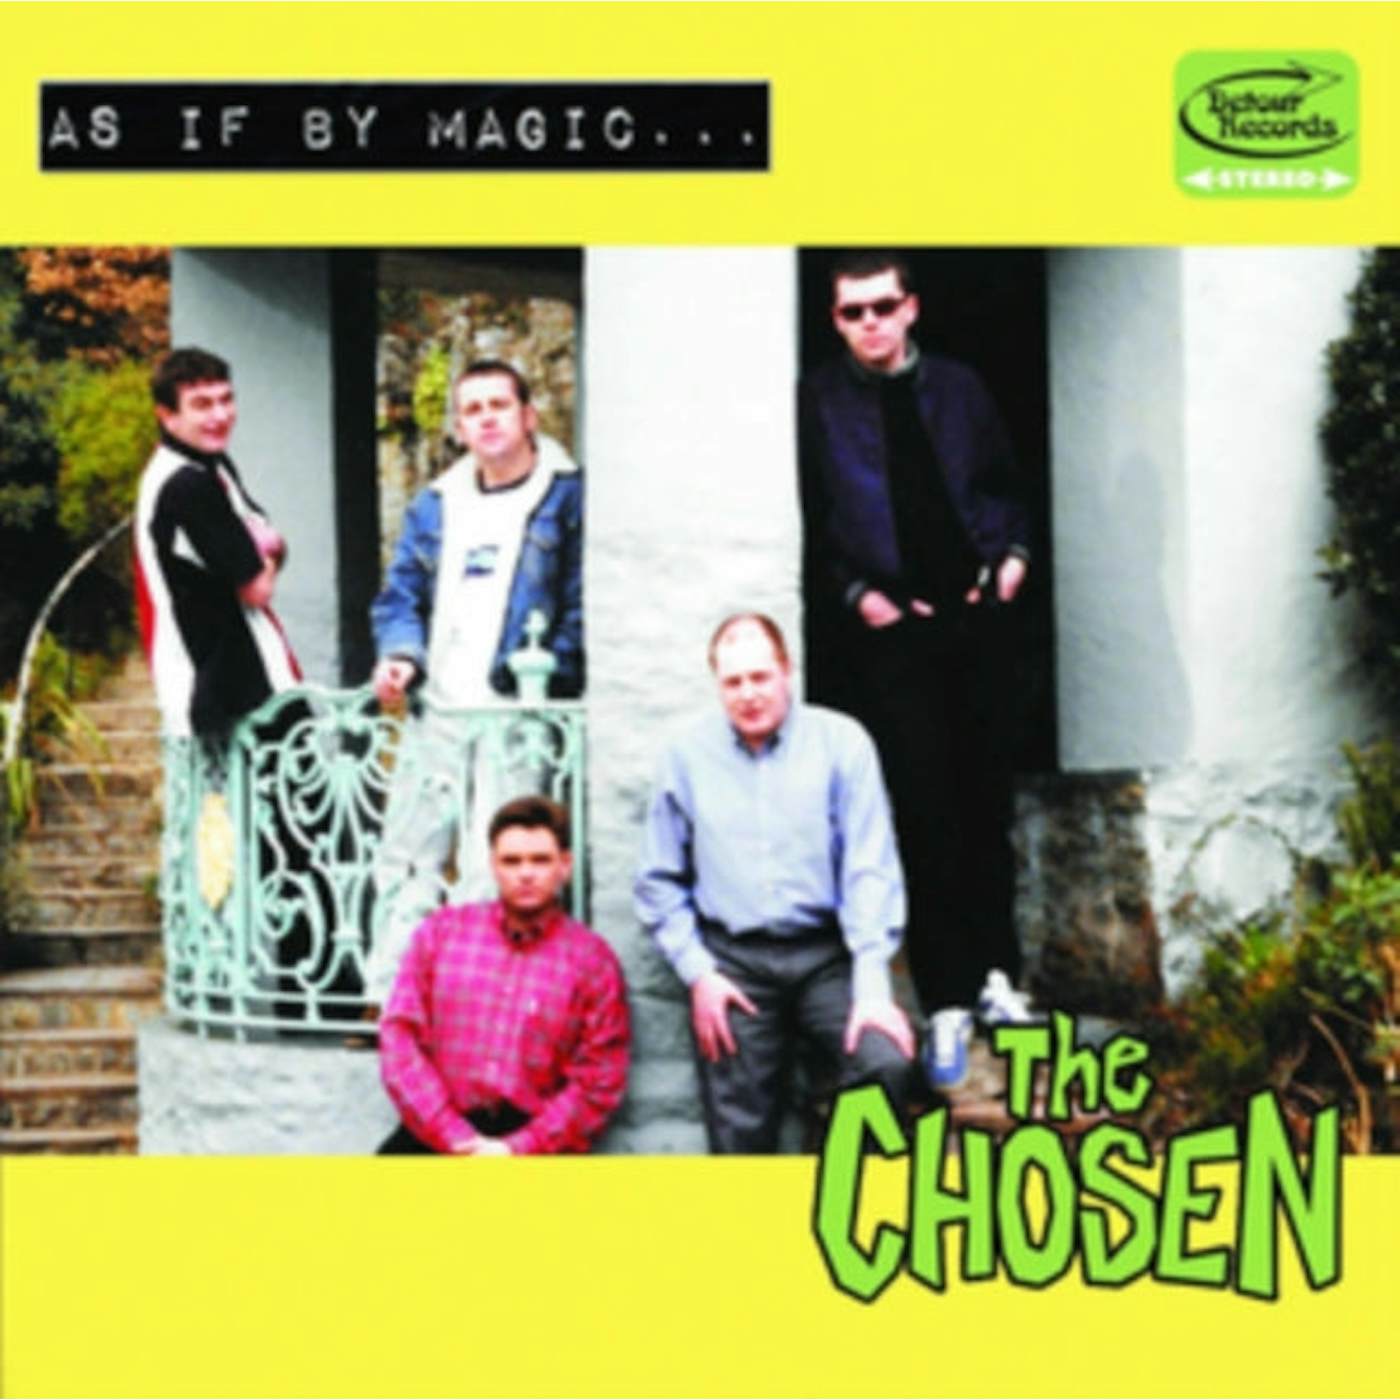 The Chosen CD - As If By Magic